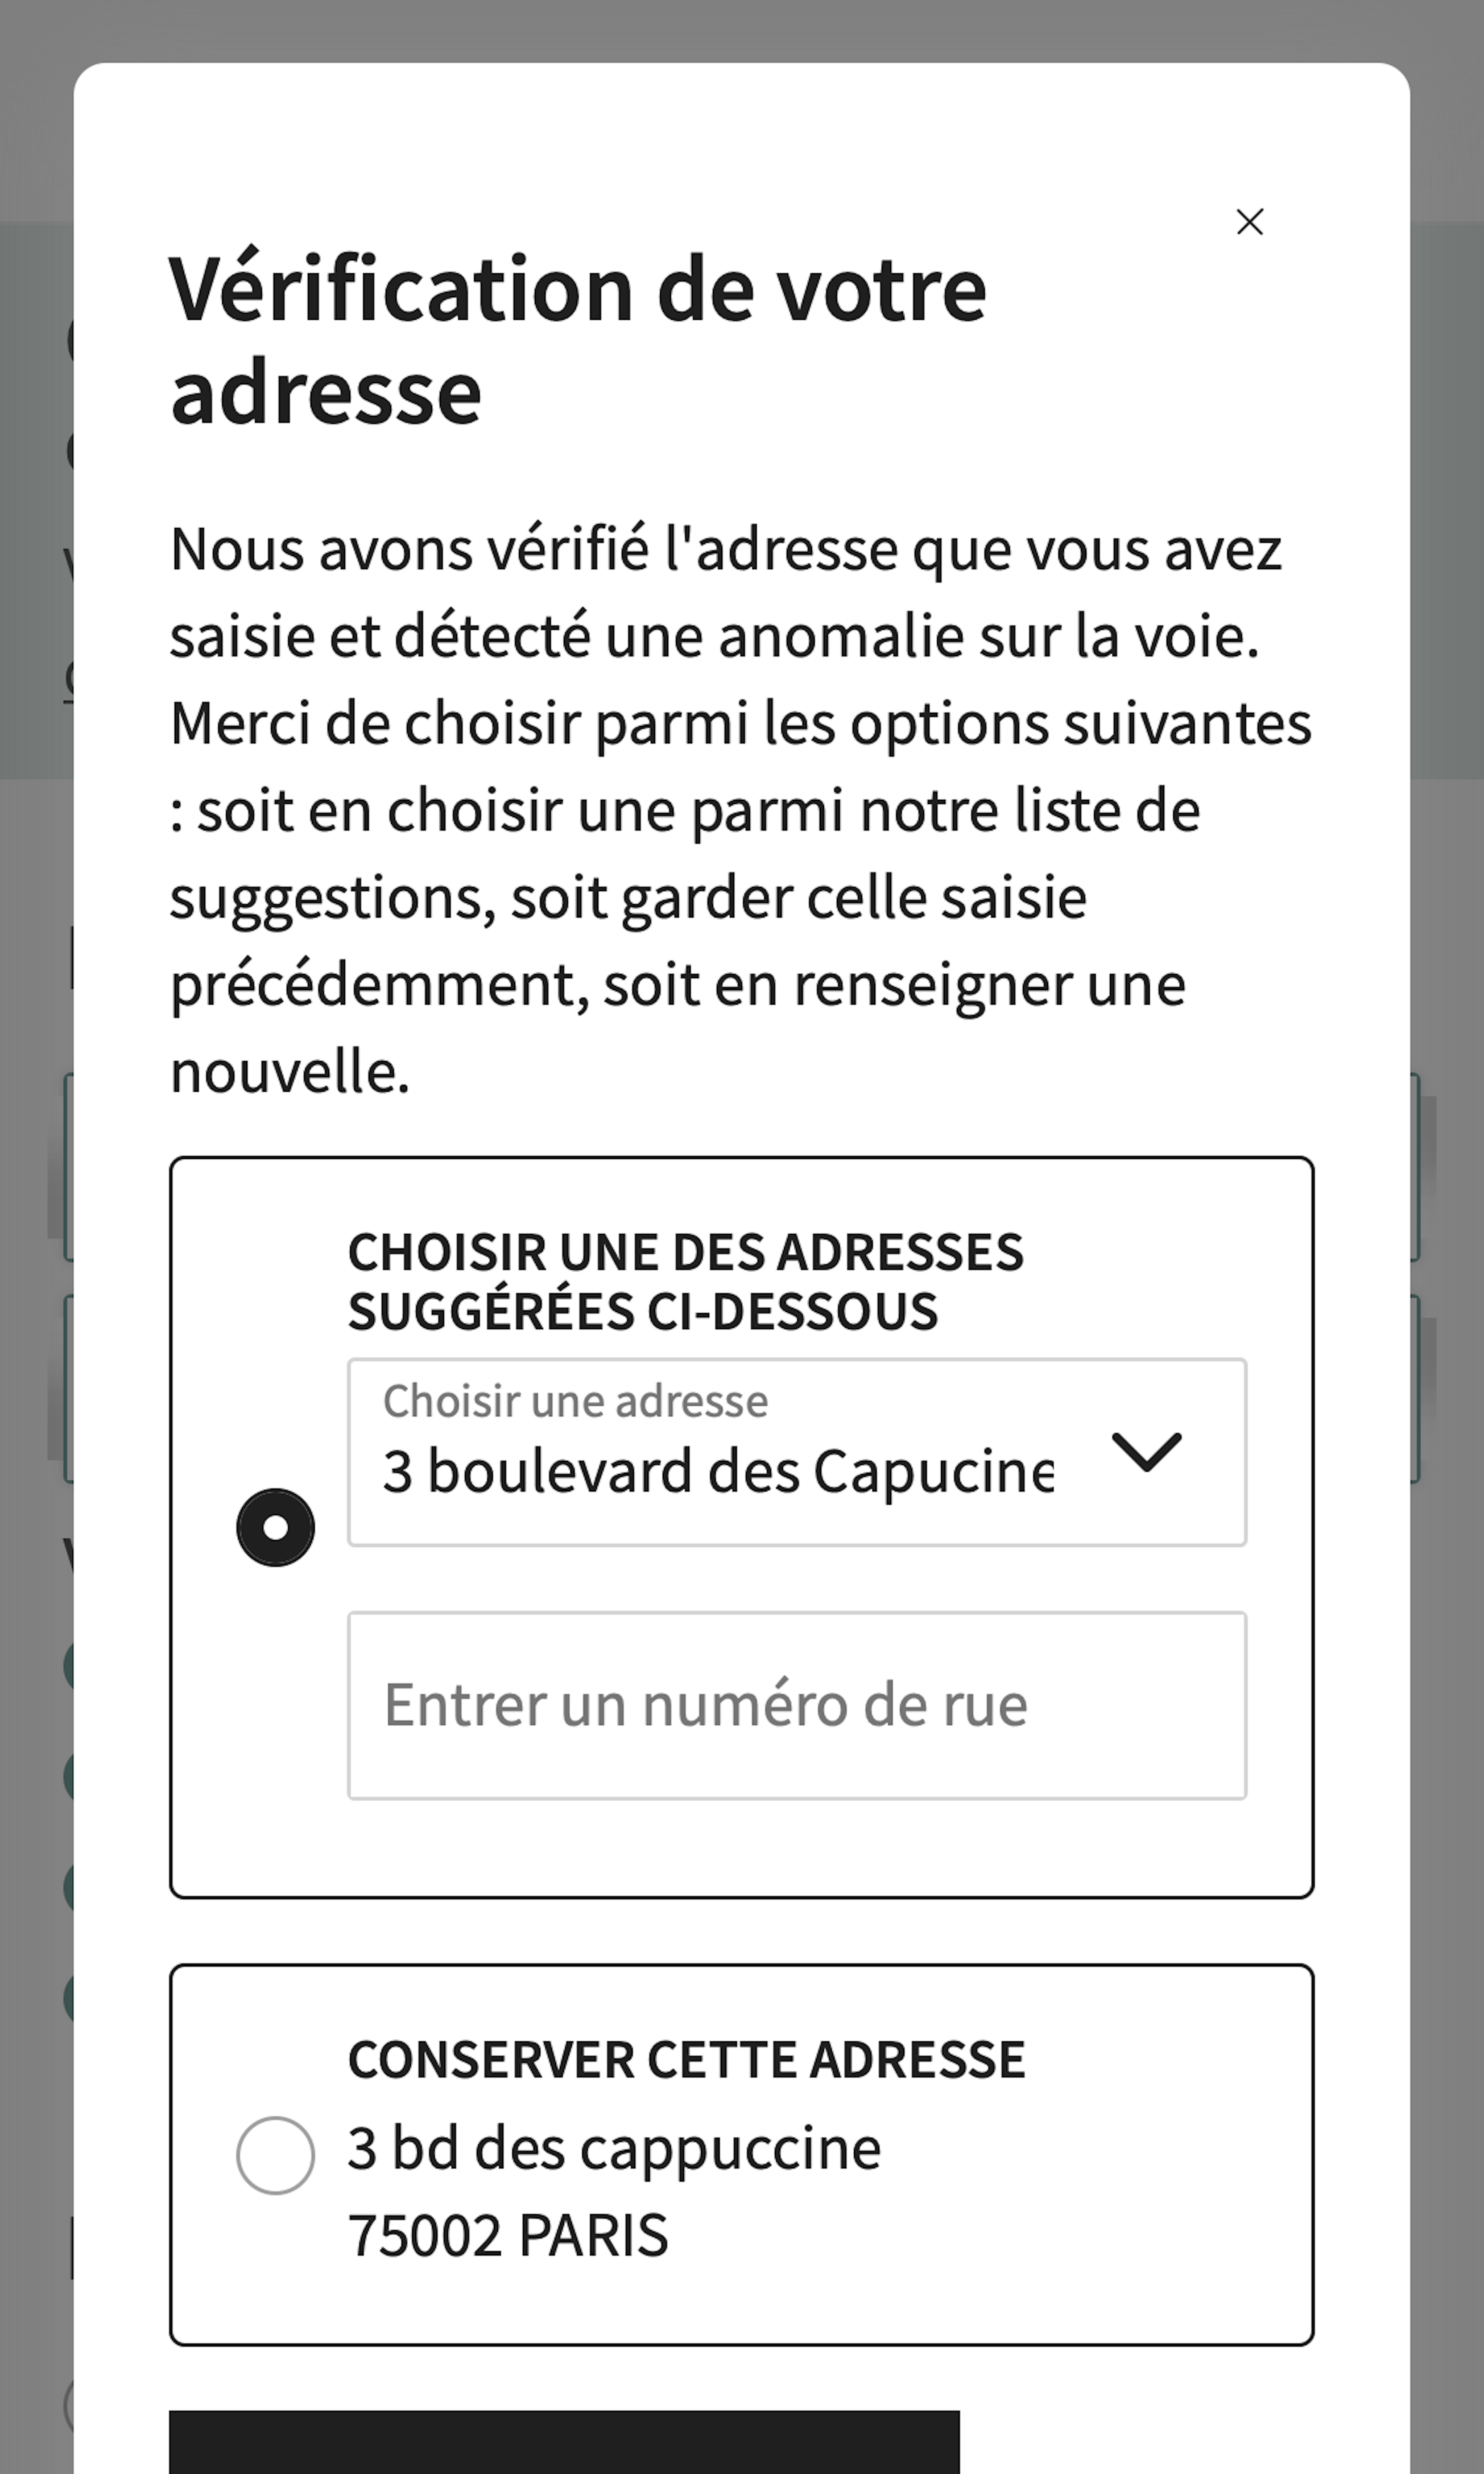 Mobile screenshot of La Redoute